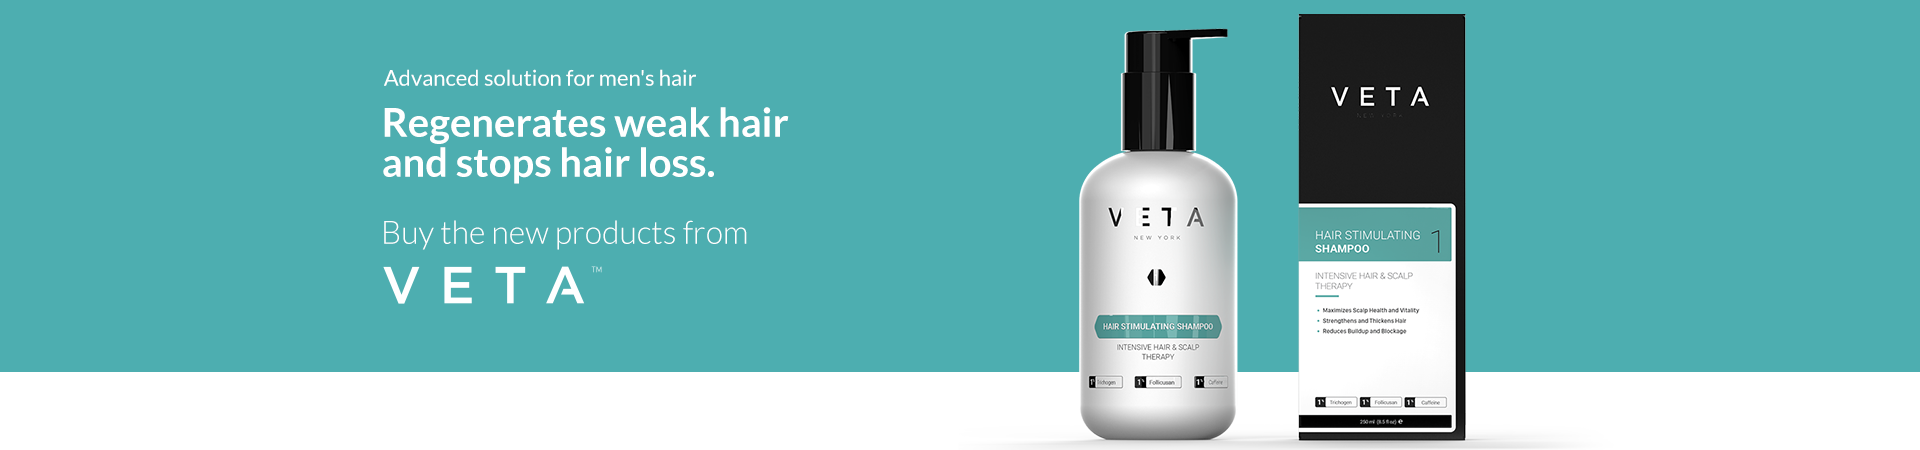 Veta Products